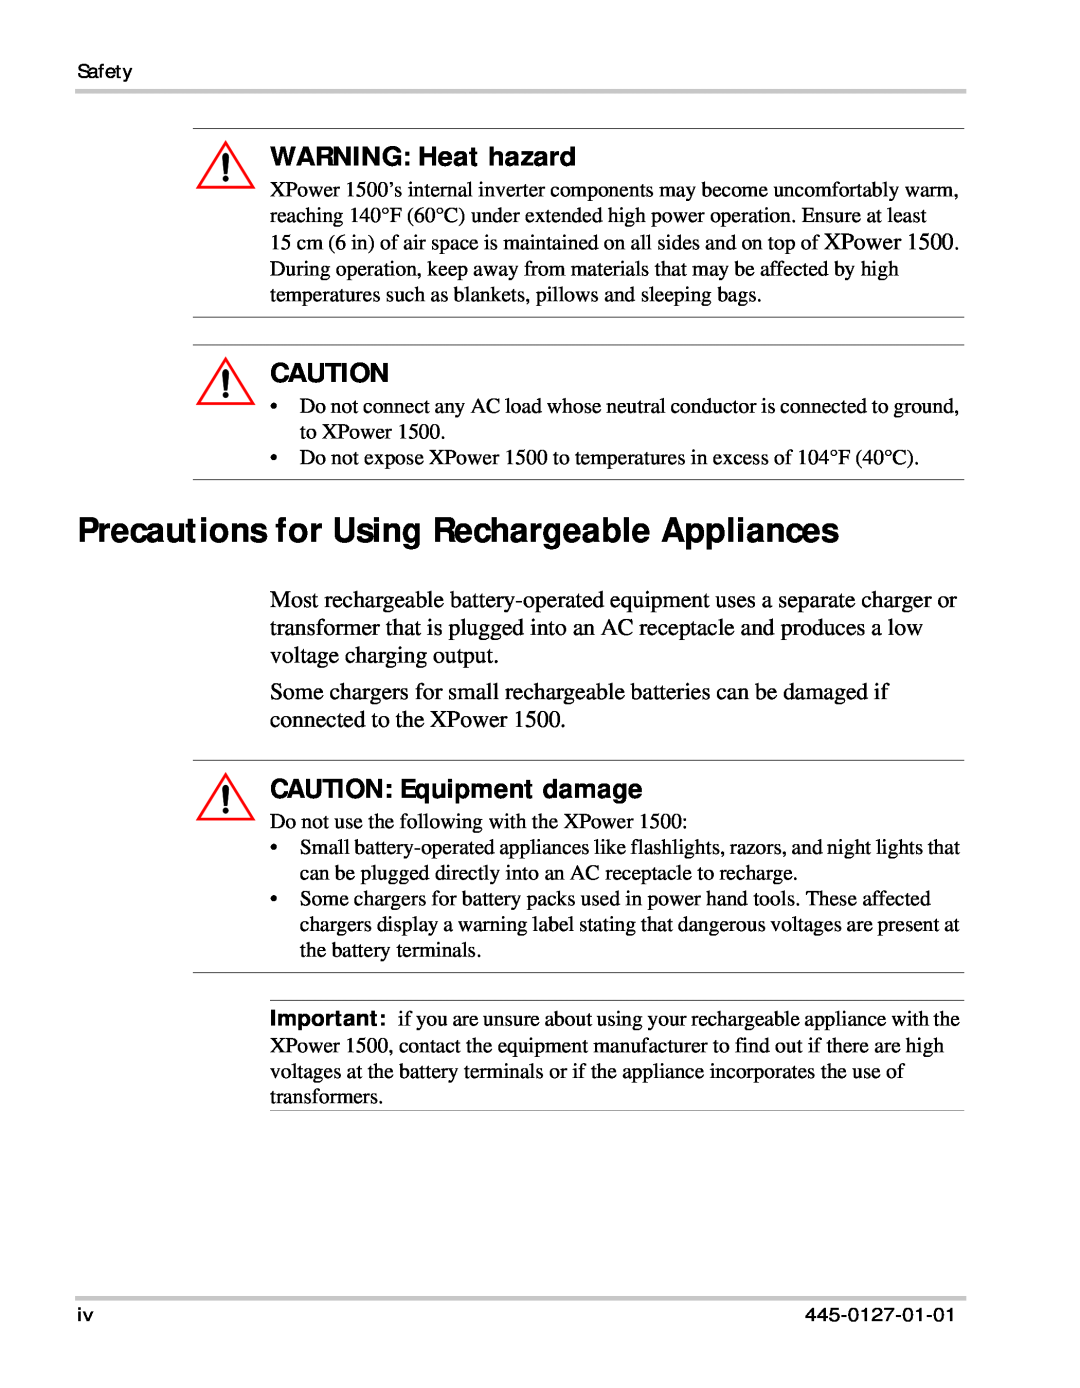 Xantrex Technology 1500 manual Precautions for Using Rechargeable Appliances, WARNING Heat hazard, CAUTION Equipment damage 